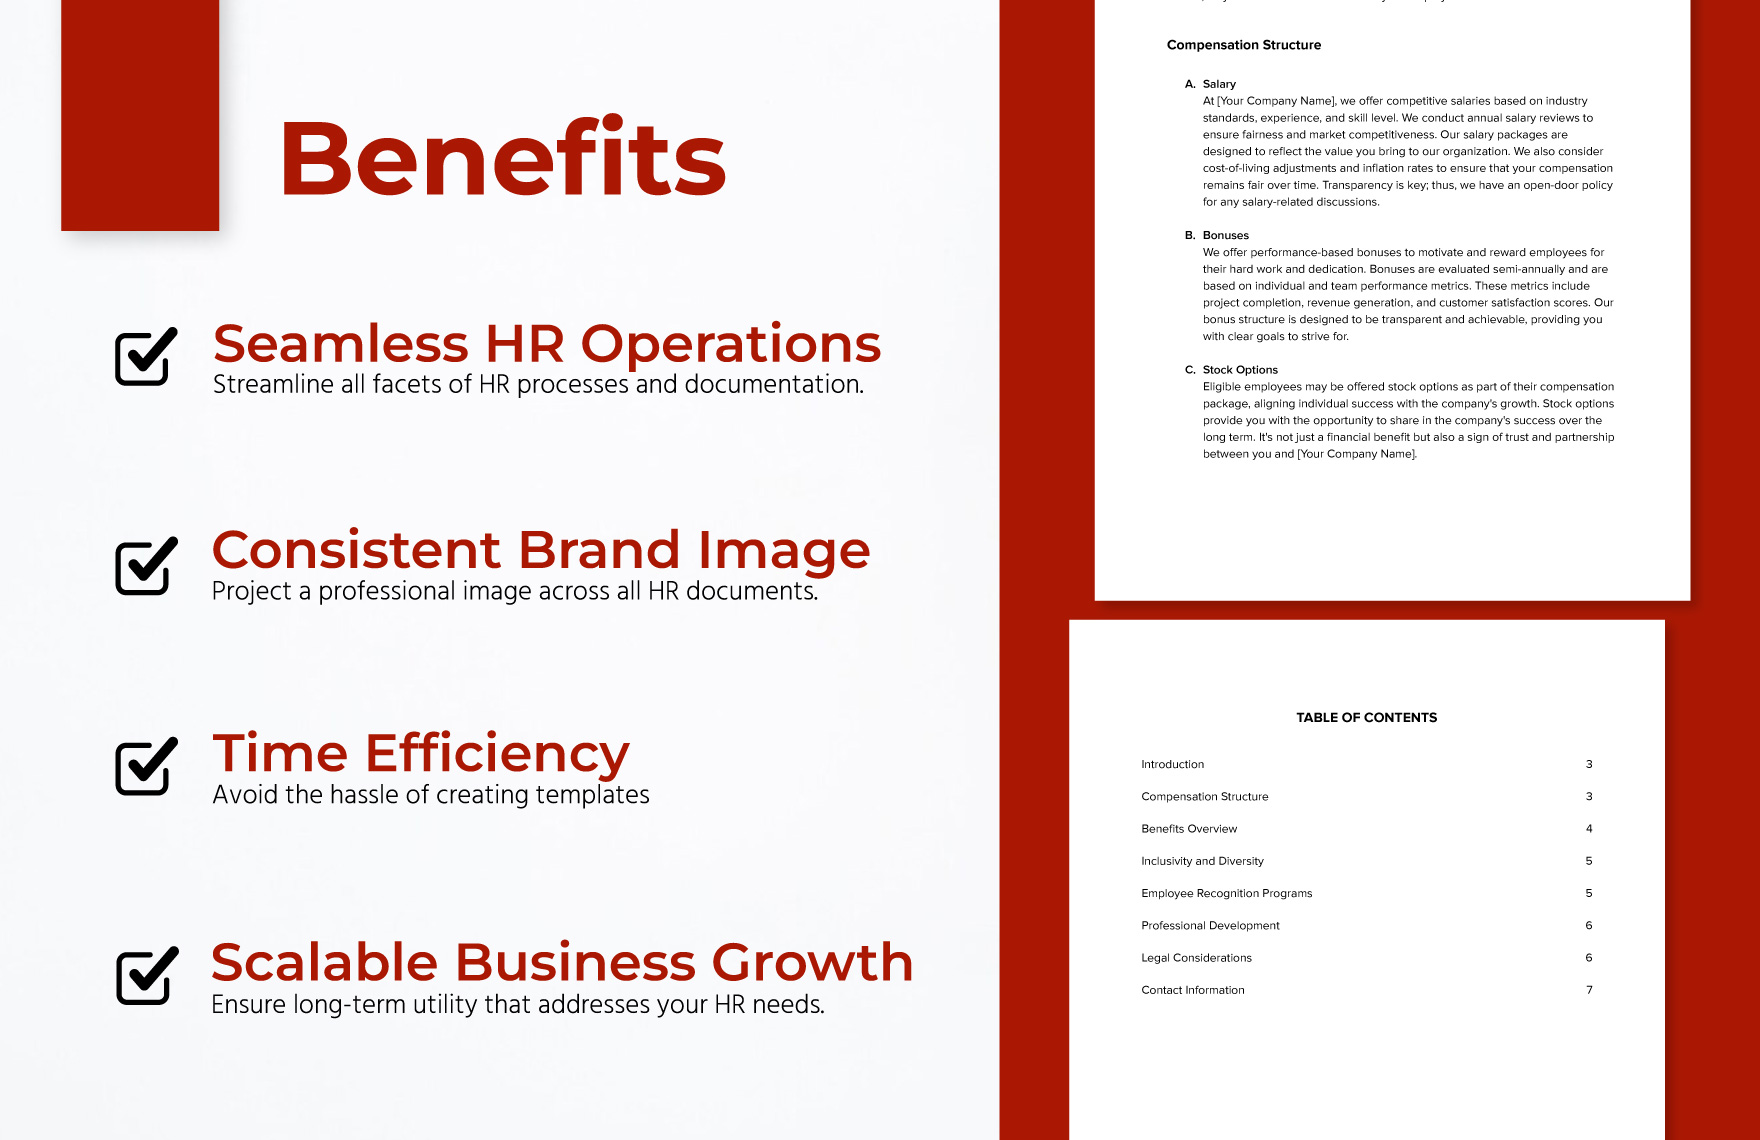 Inclusive Benefits and Compensation Handbook HR Template